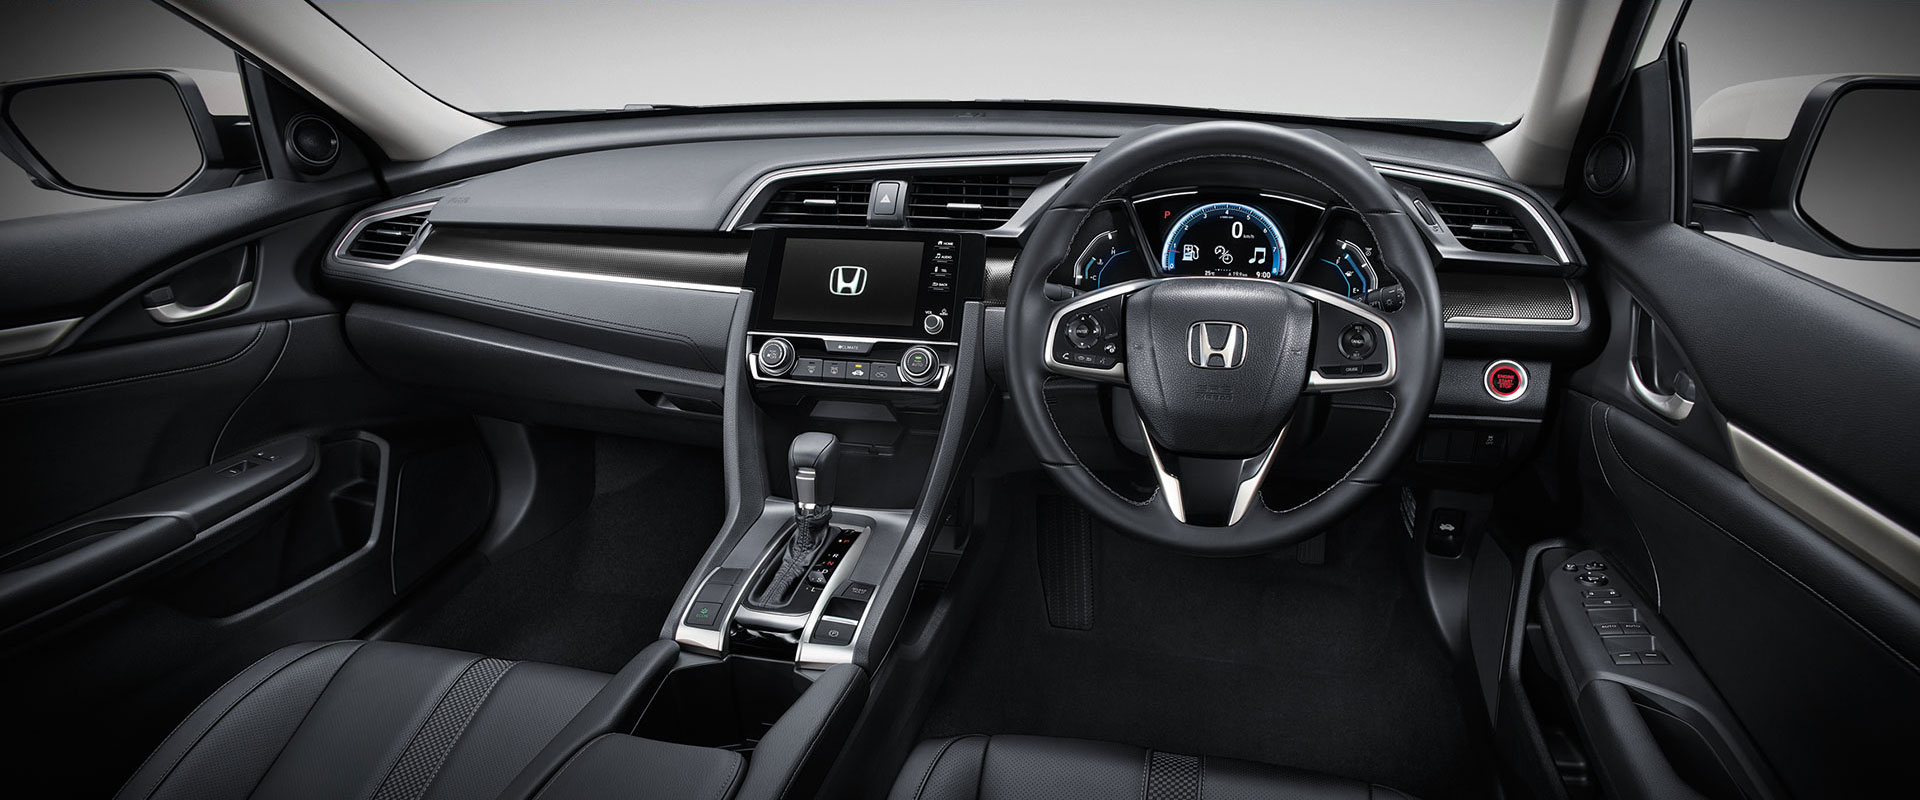 Honda Civic 1.8 E CVT ฮอนด้า ซีวิค ปี 2018 : ภาพที่ 19